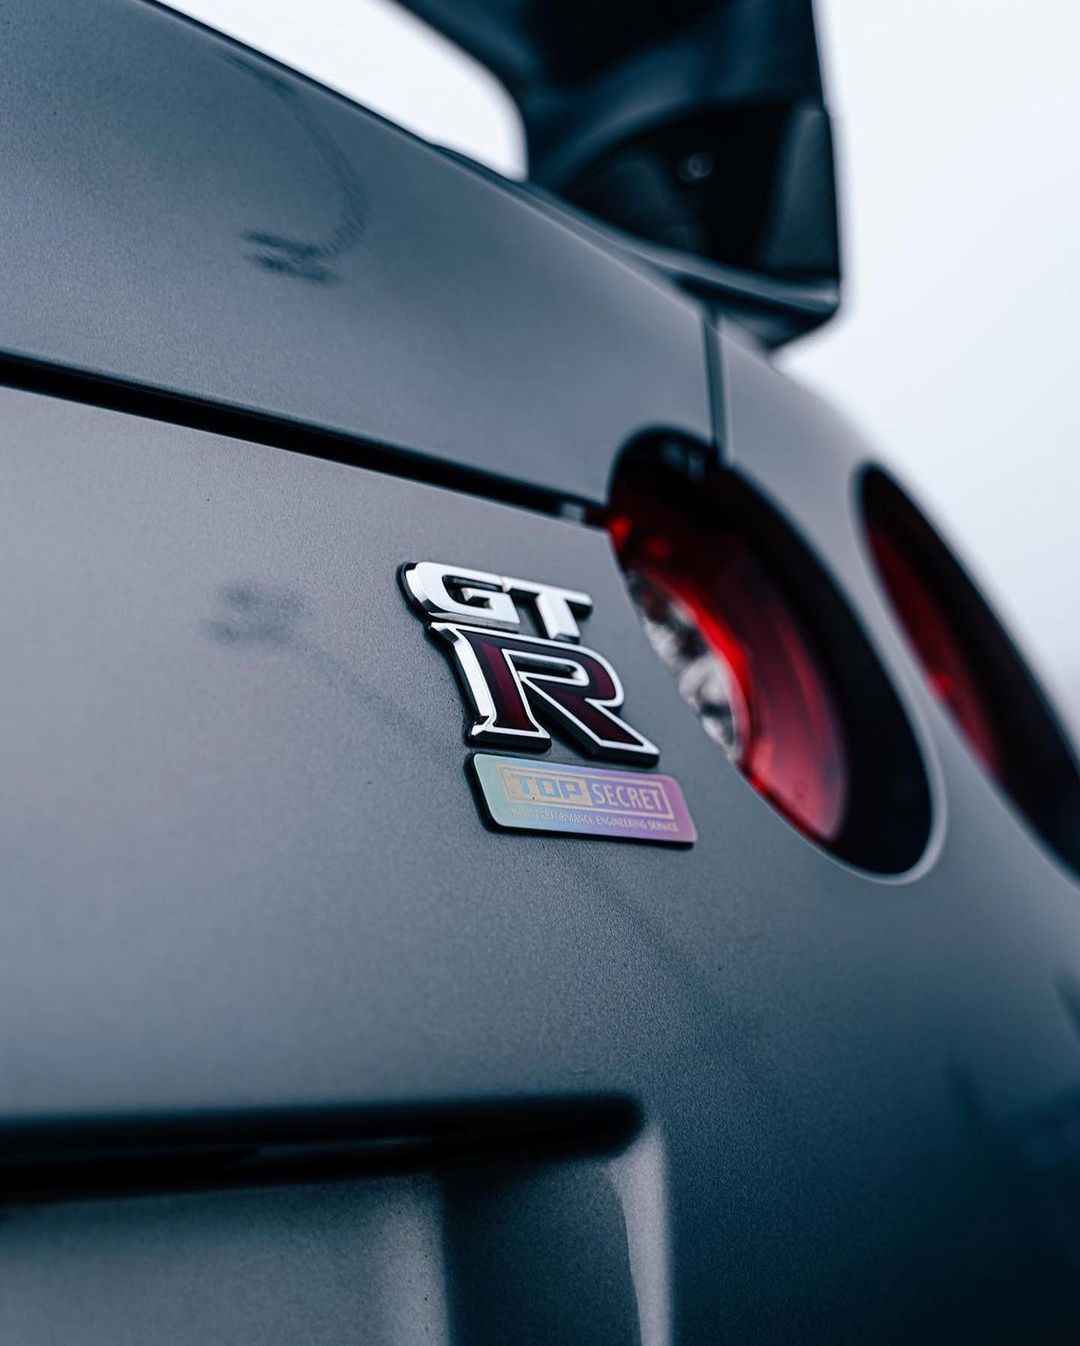 Autoass Media on X: Nissan R36 Skyline GT-R Render